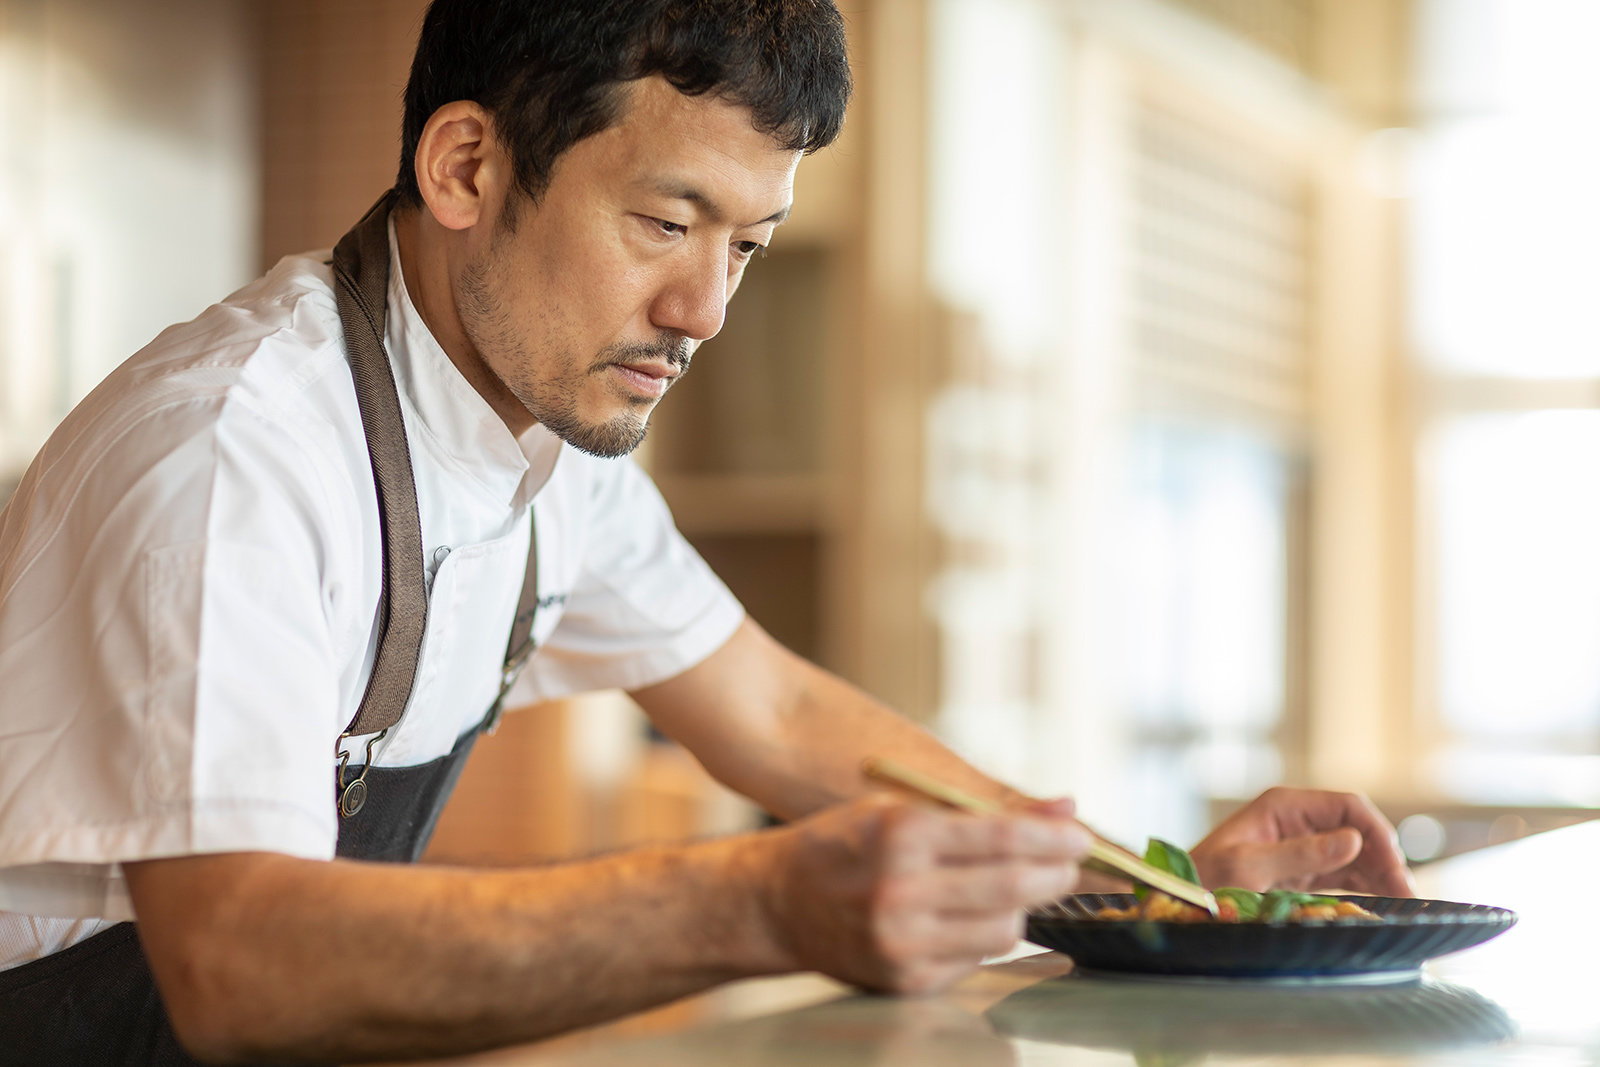 Chef Mitsuru Konishi picks up a Michelin star for Zest by Konishi